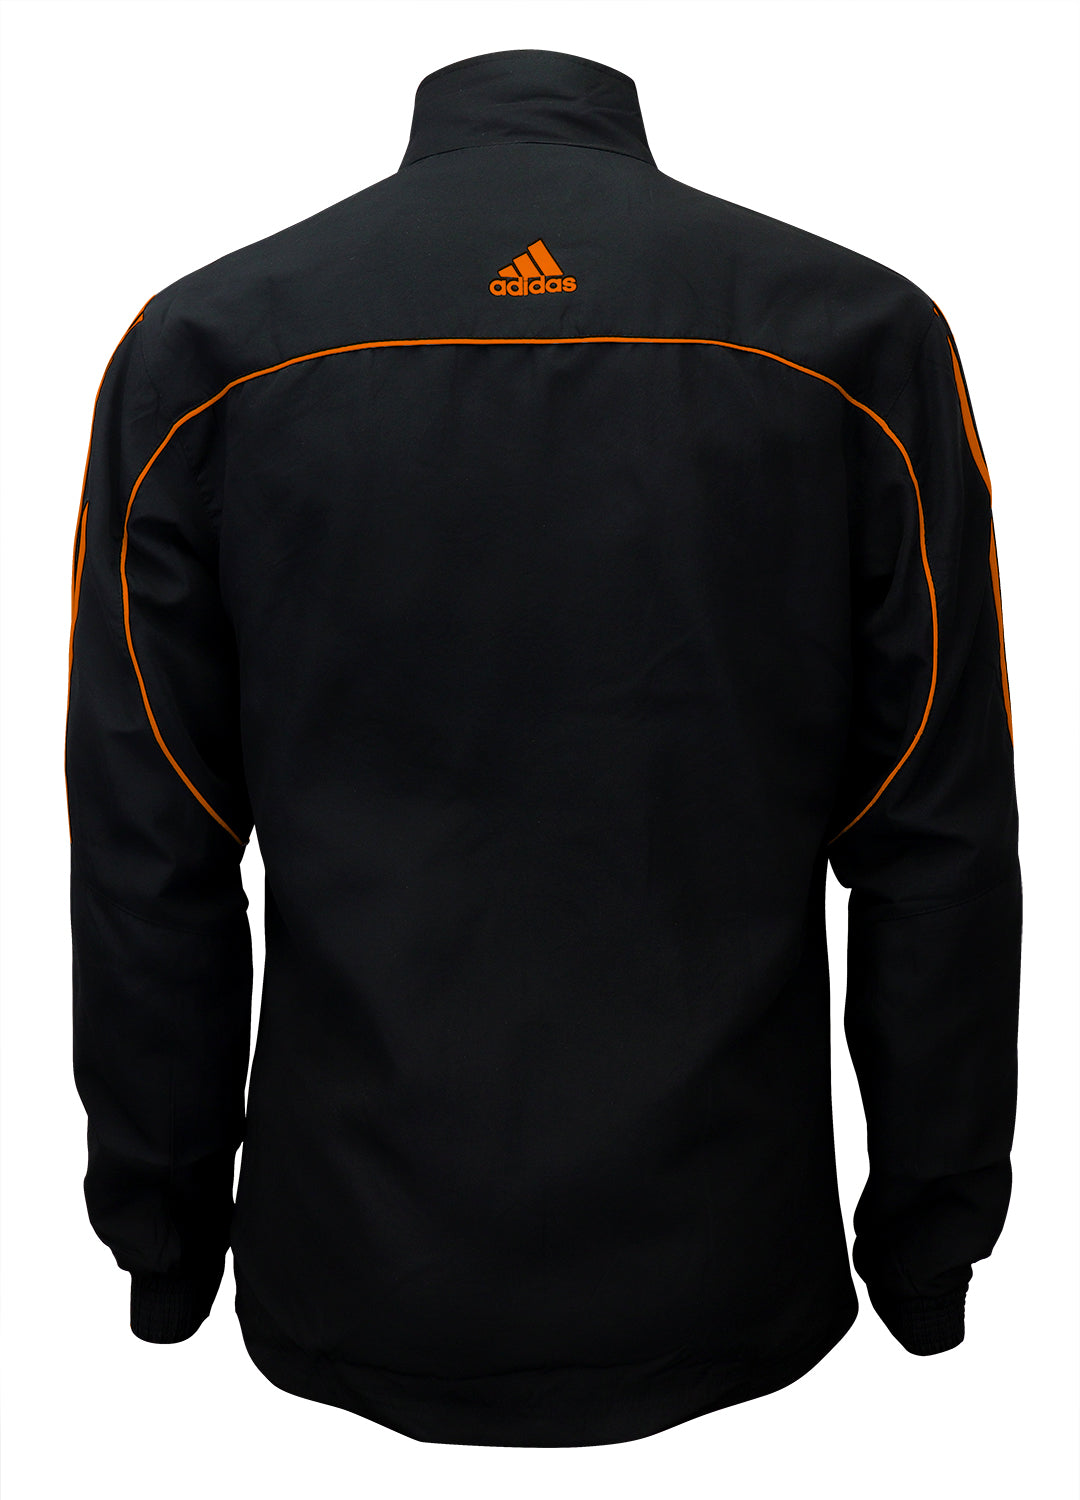 adidas Black with Neon Orange Stripes Windbreaker Style Team Jacket Back View